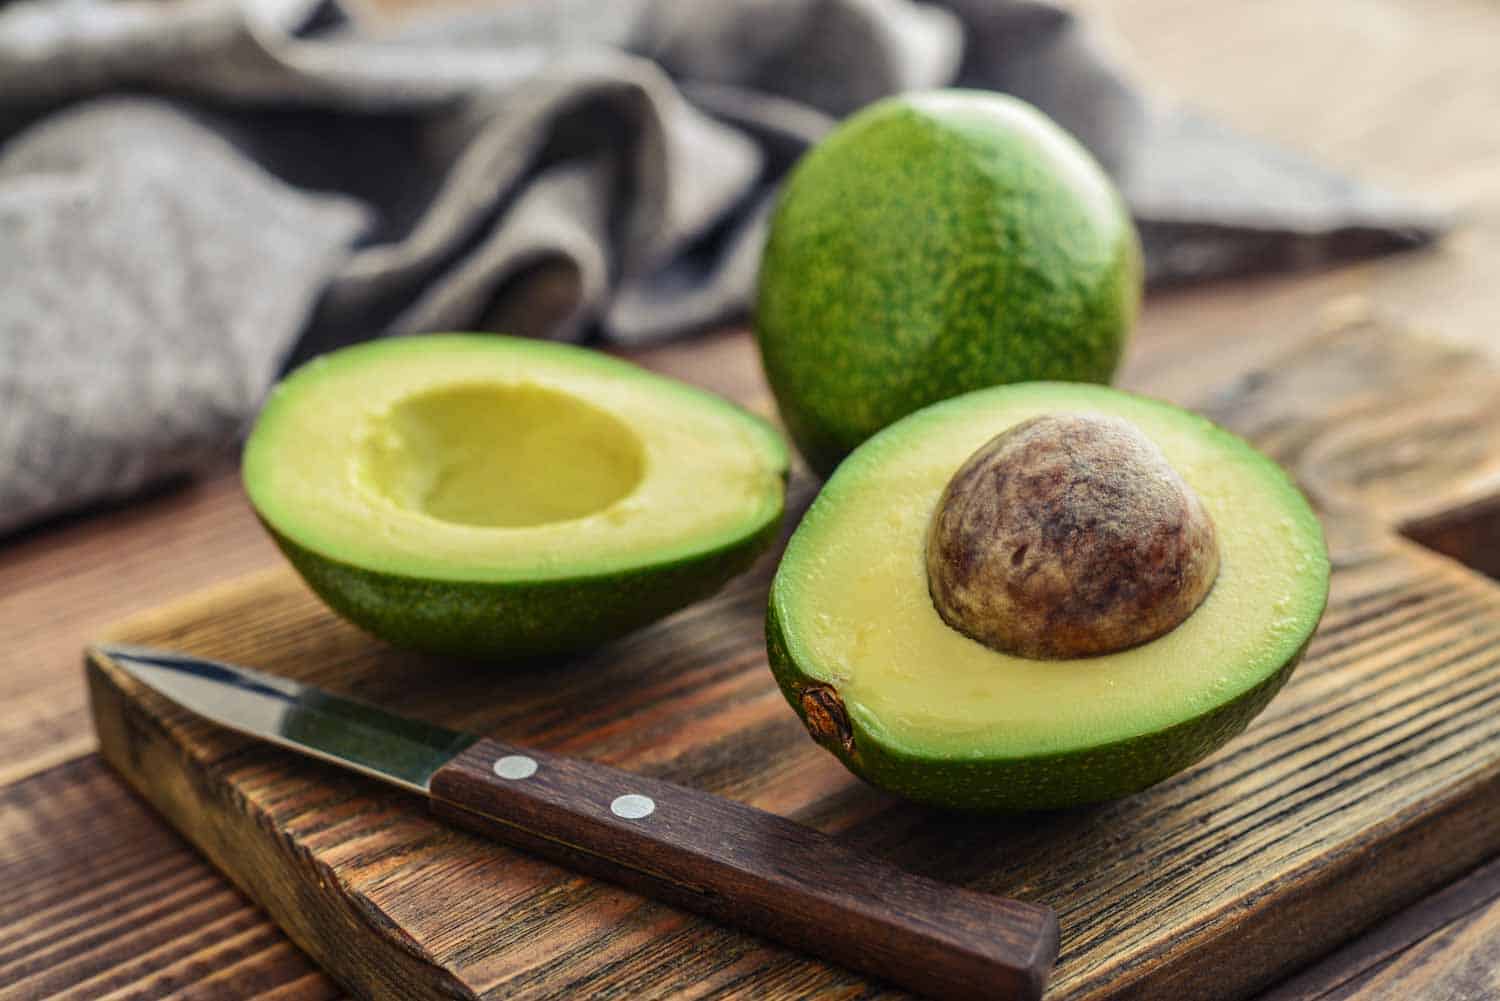 An avocado cut open on a plate